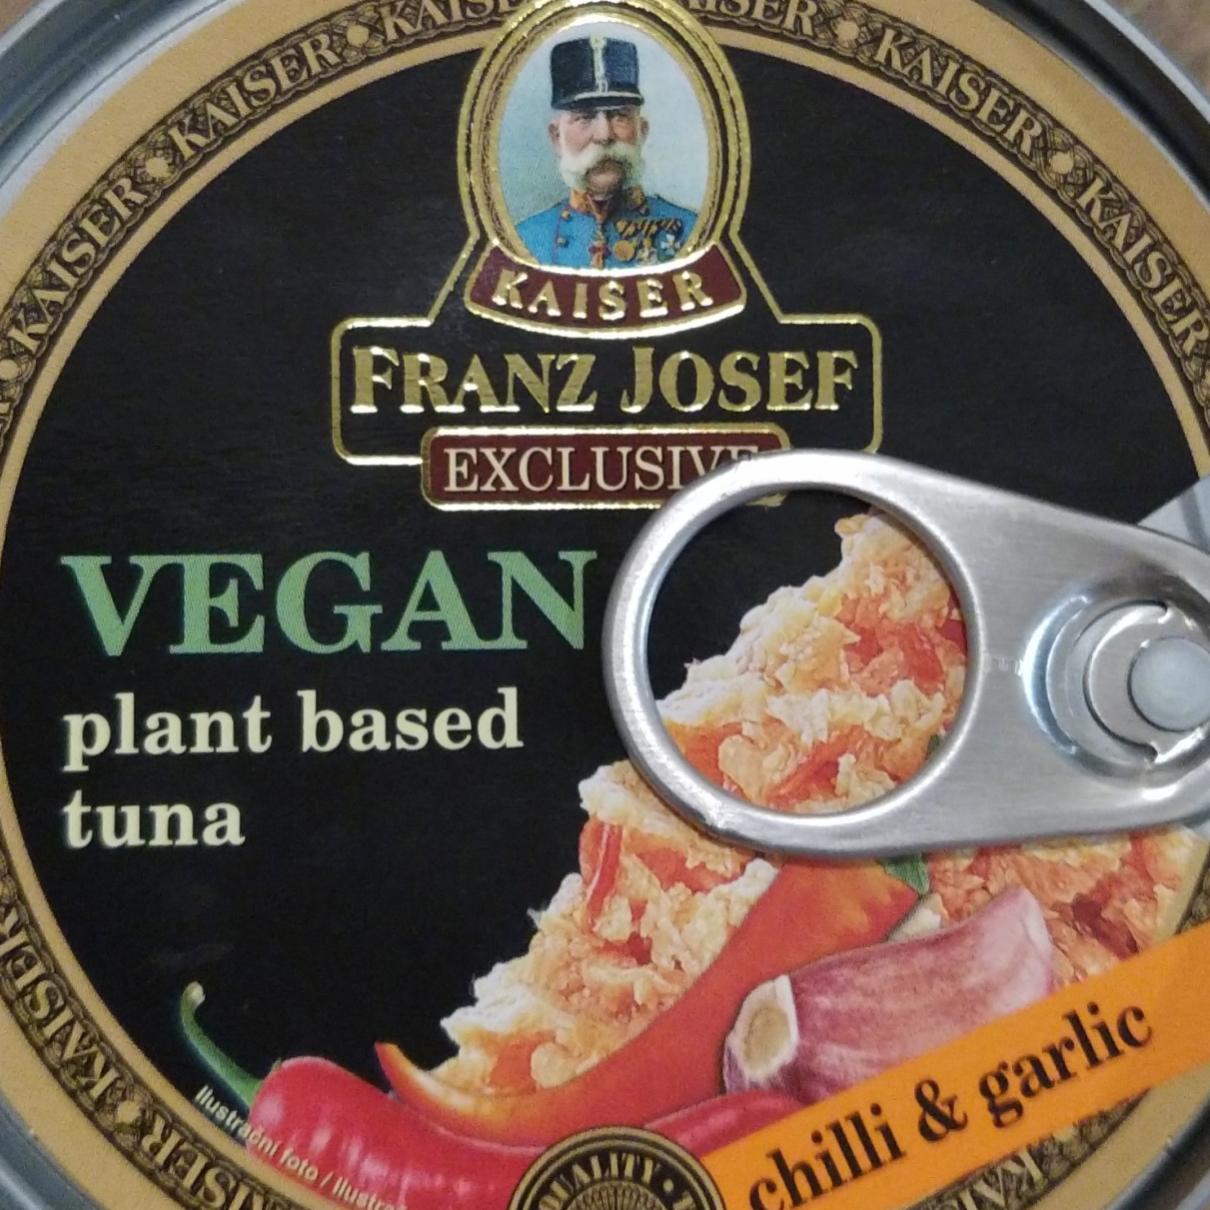 Zdjęcia - Vegan plant based tuna Kaiser Franz Josef